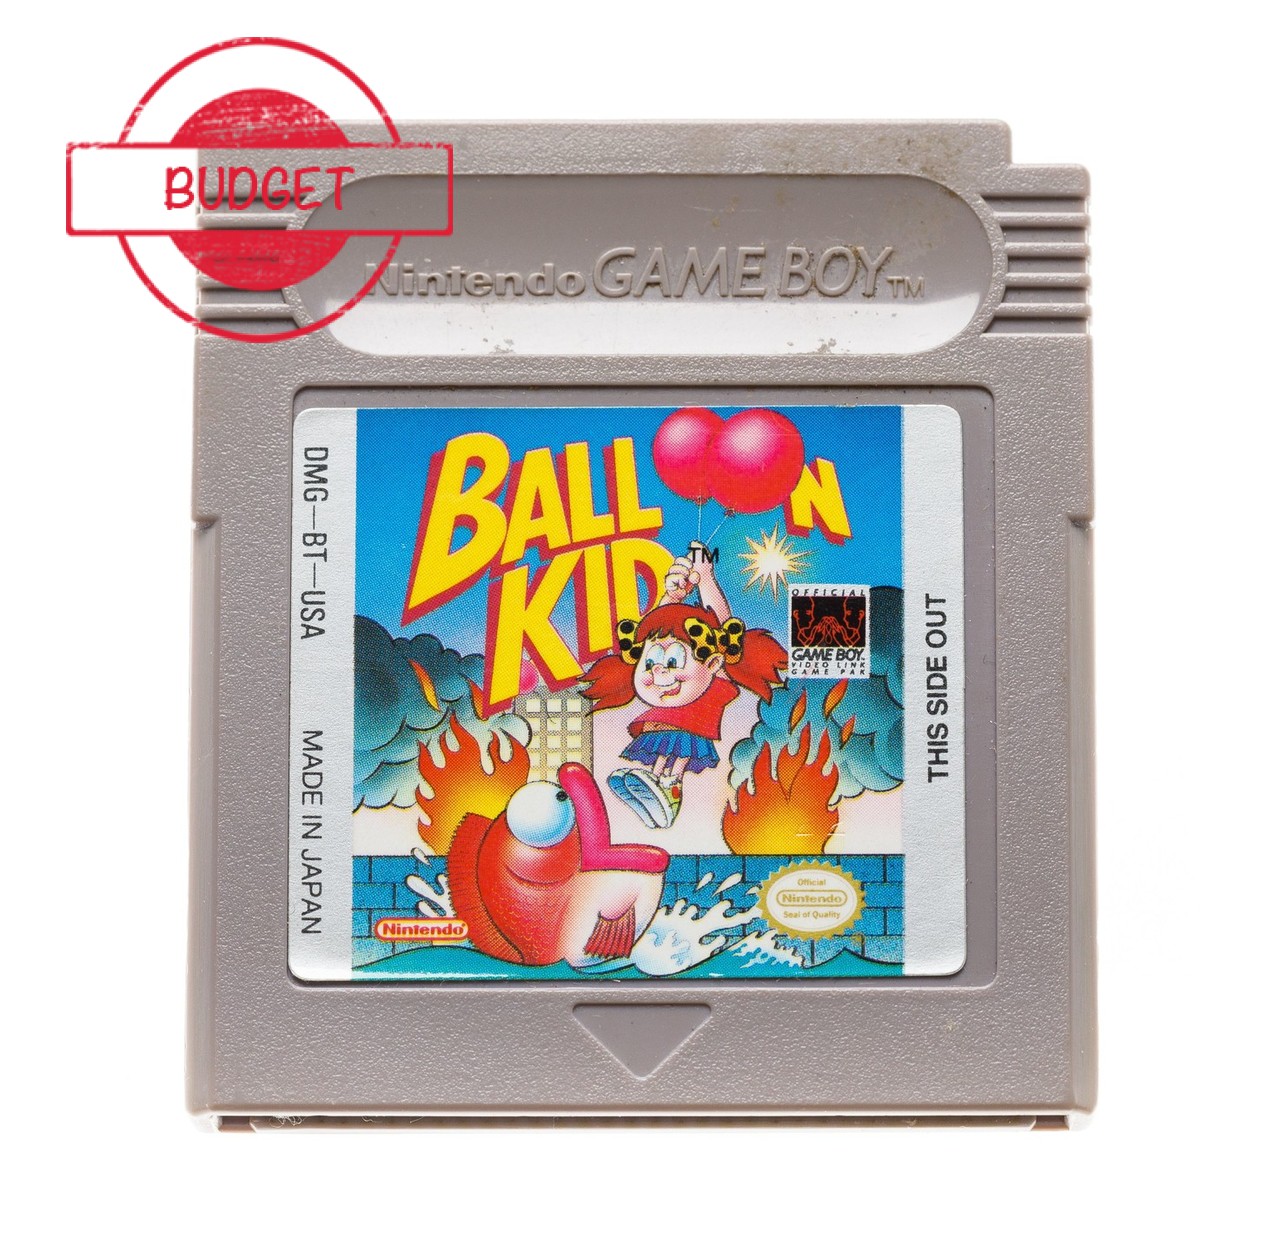 Balloon Kid - Budget Kopen | Gameboy Classic Games